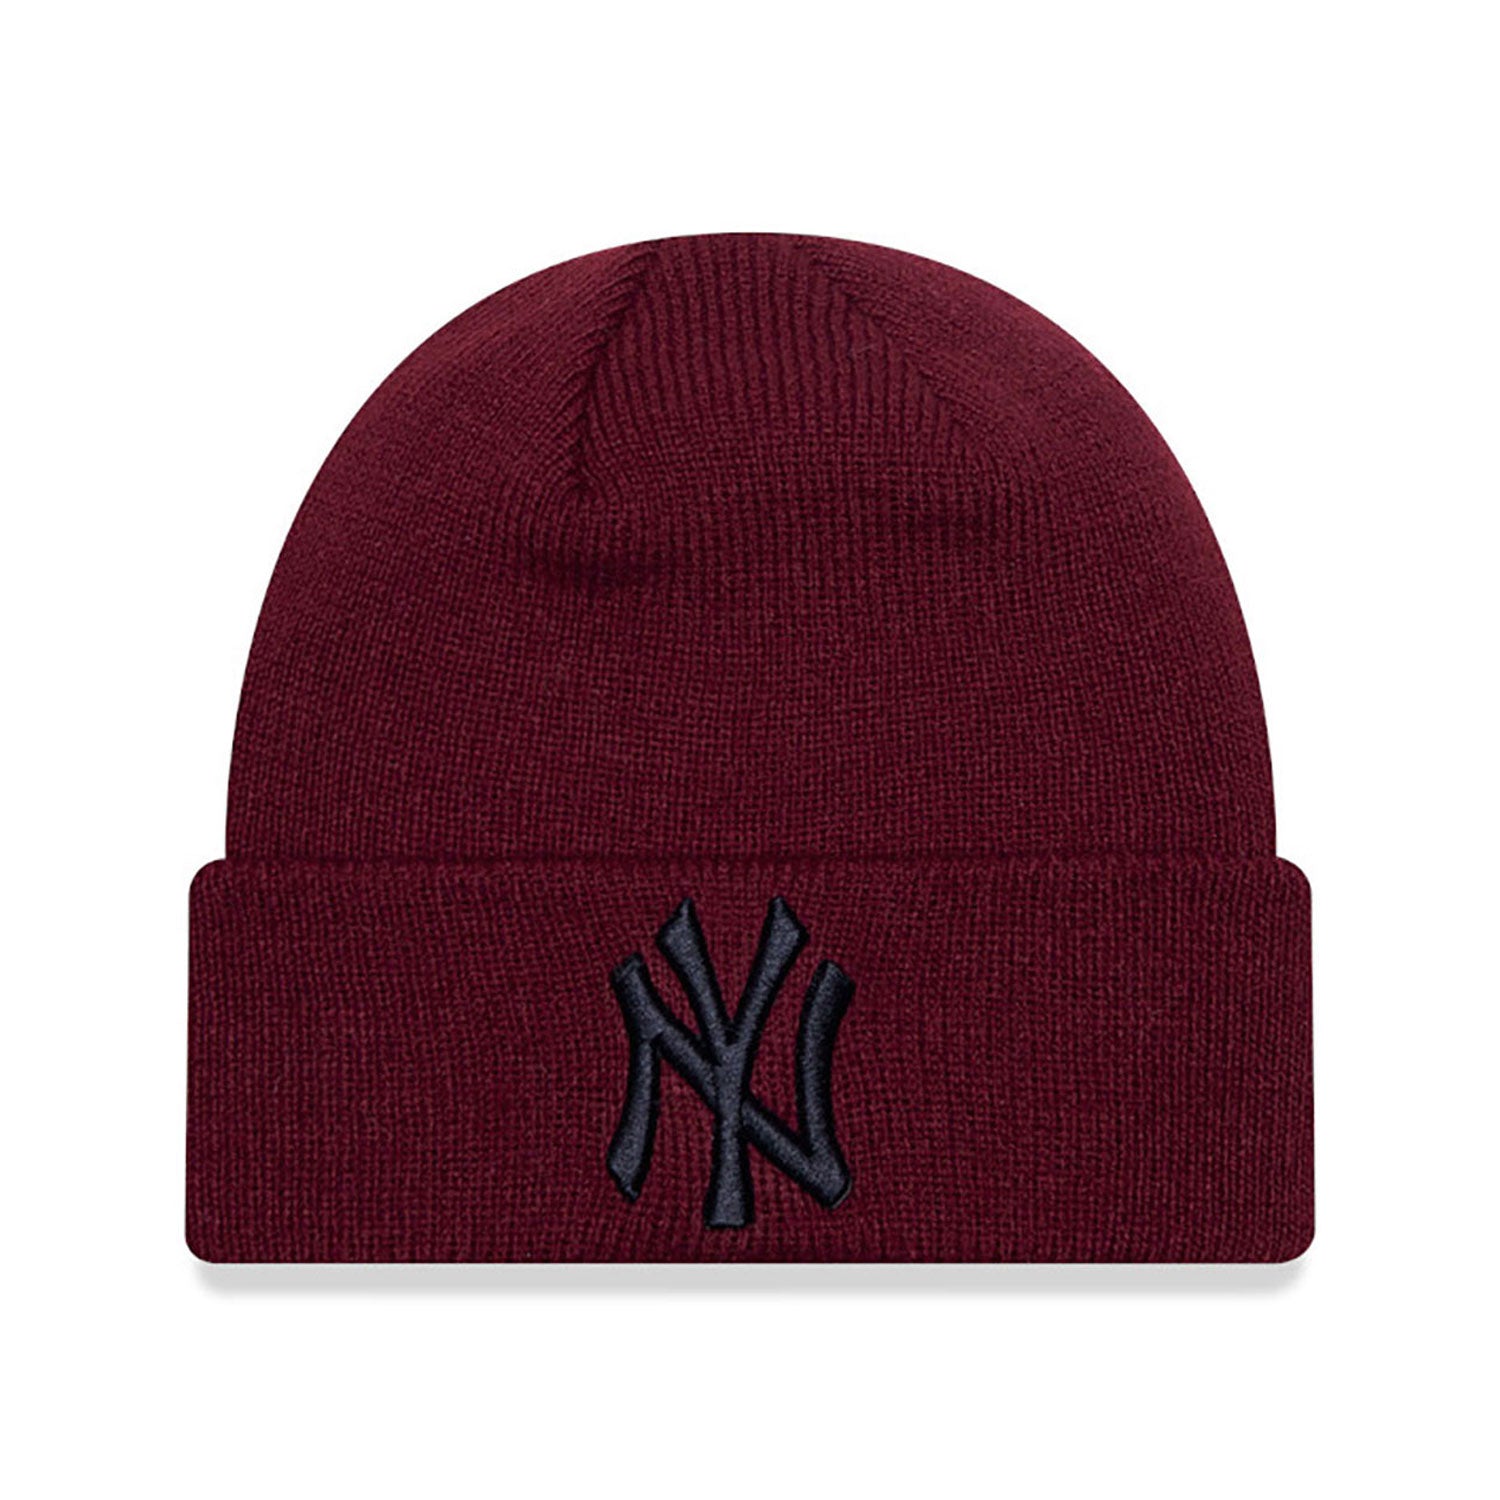 New Era bonnet kids NY Yankees "Bordeaux/Black" (NEW Collection)